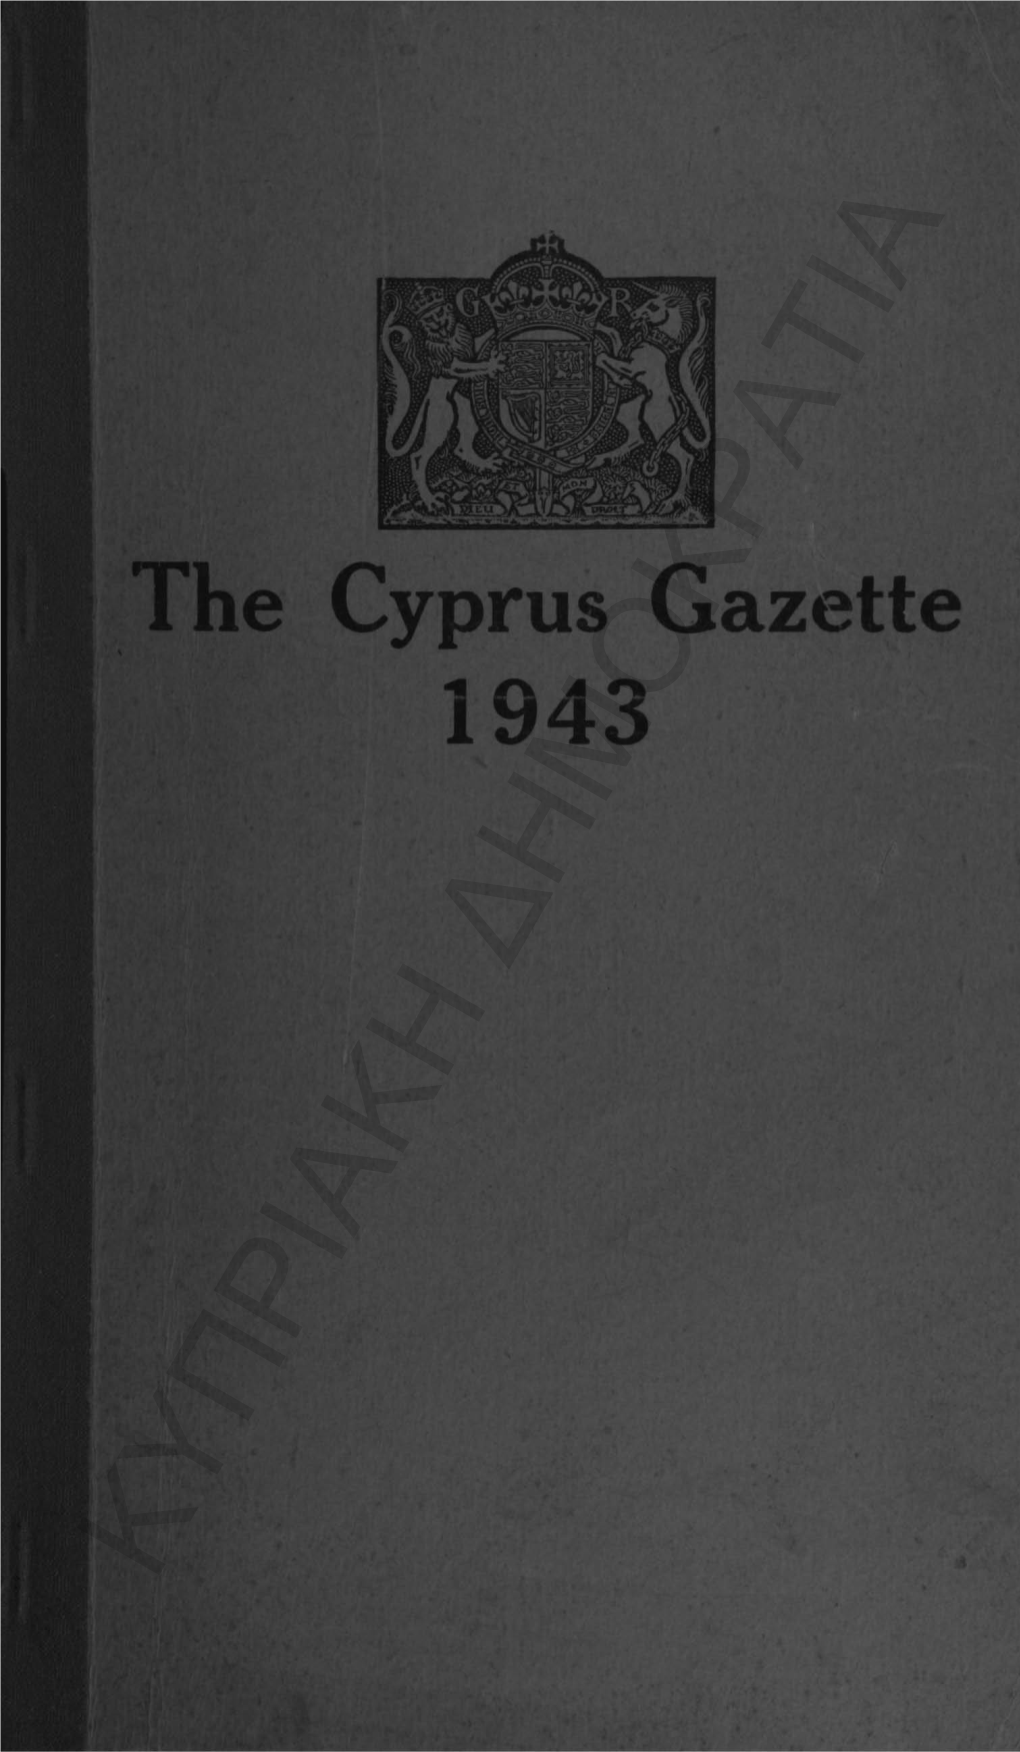 The Cyprus Gazette, 1943